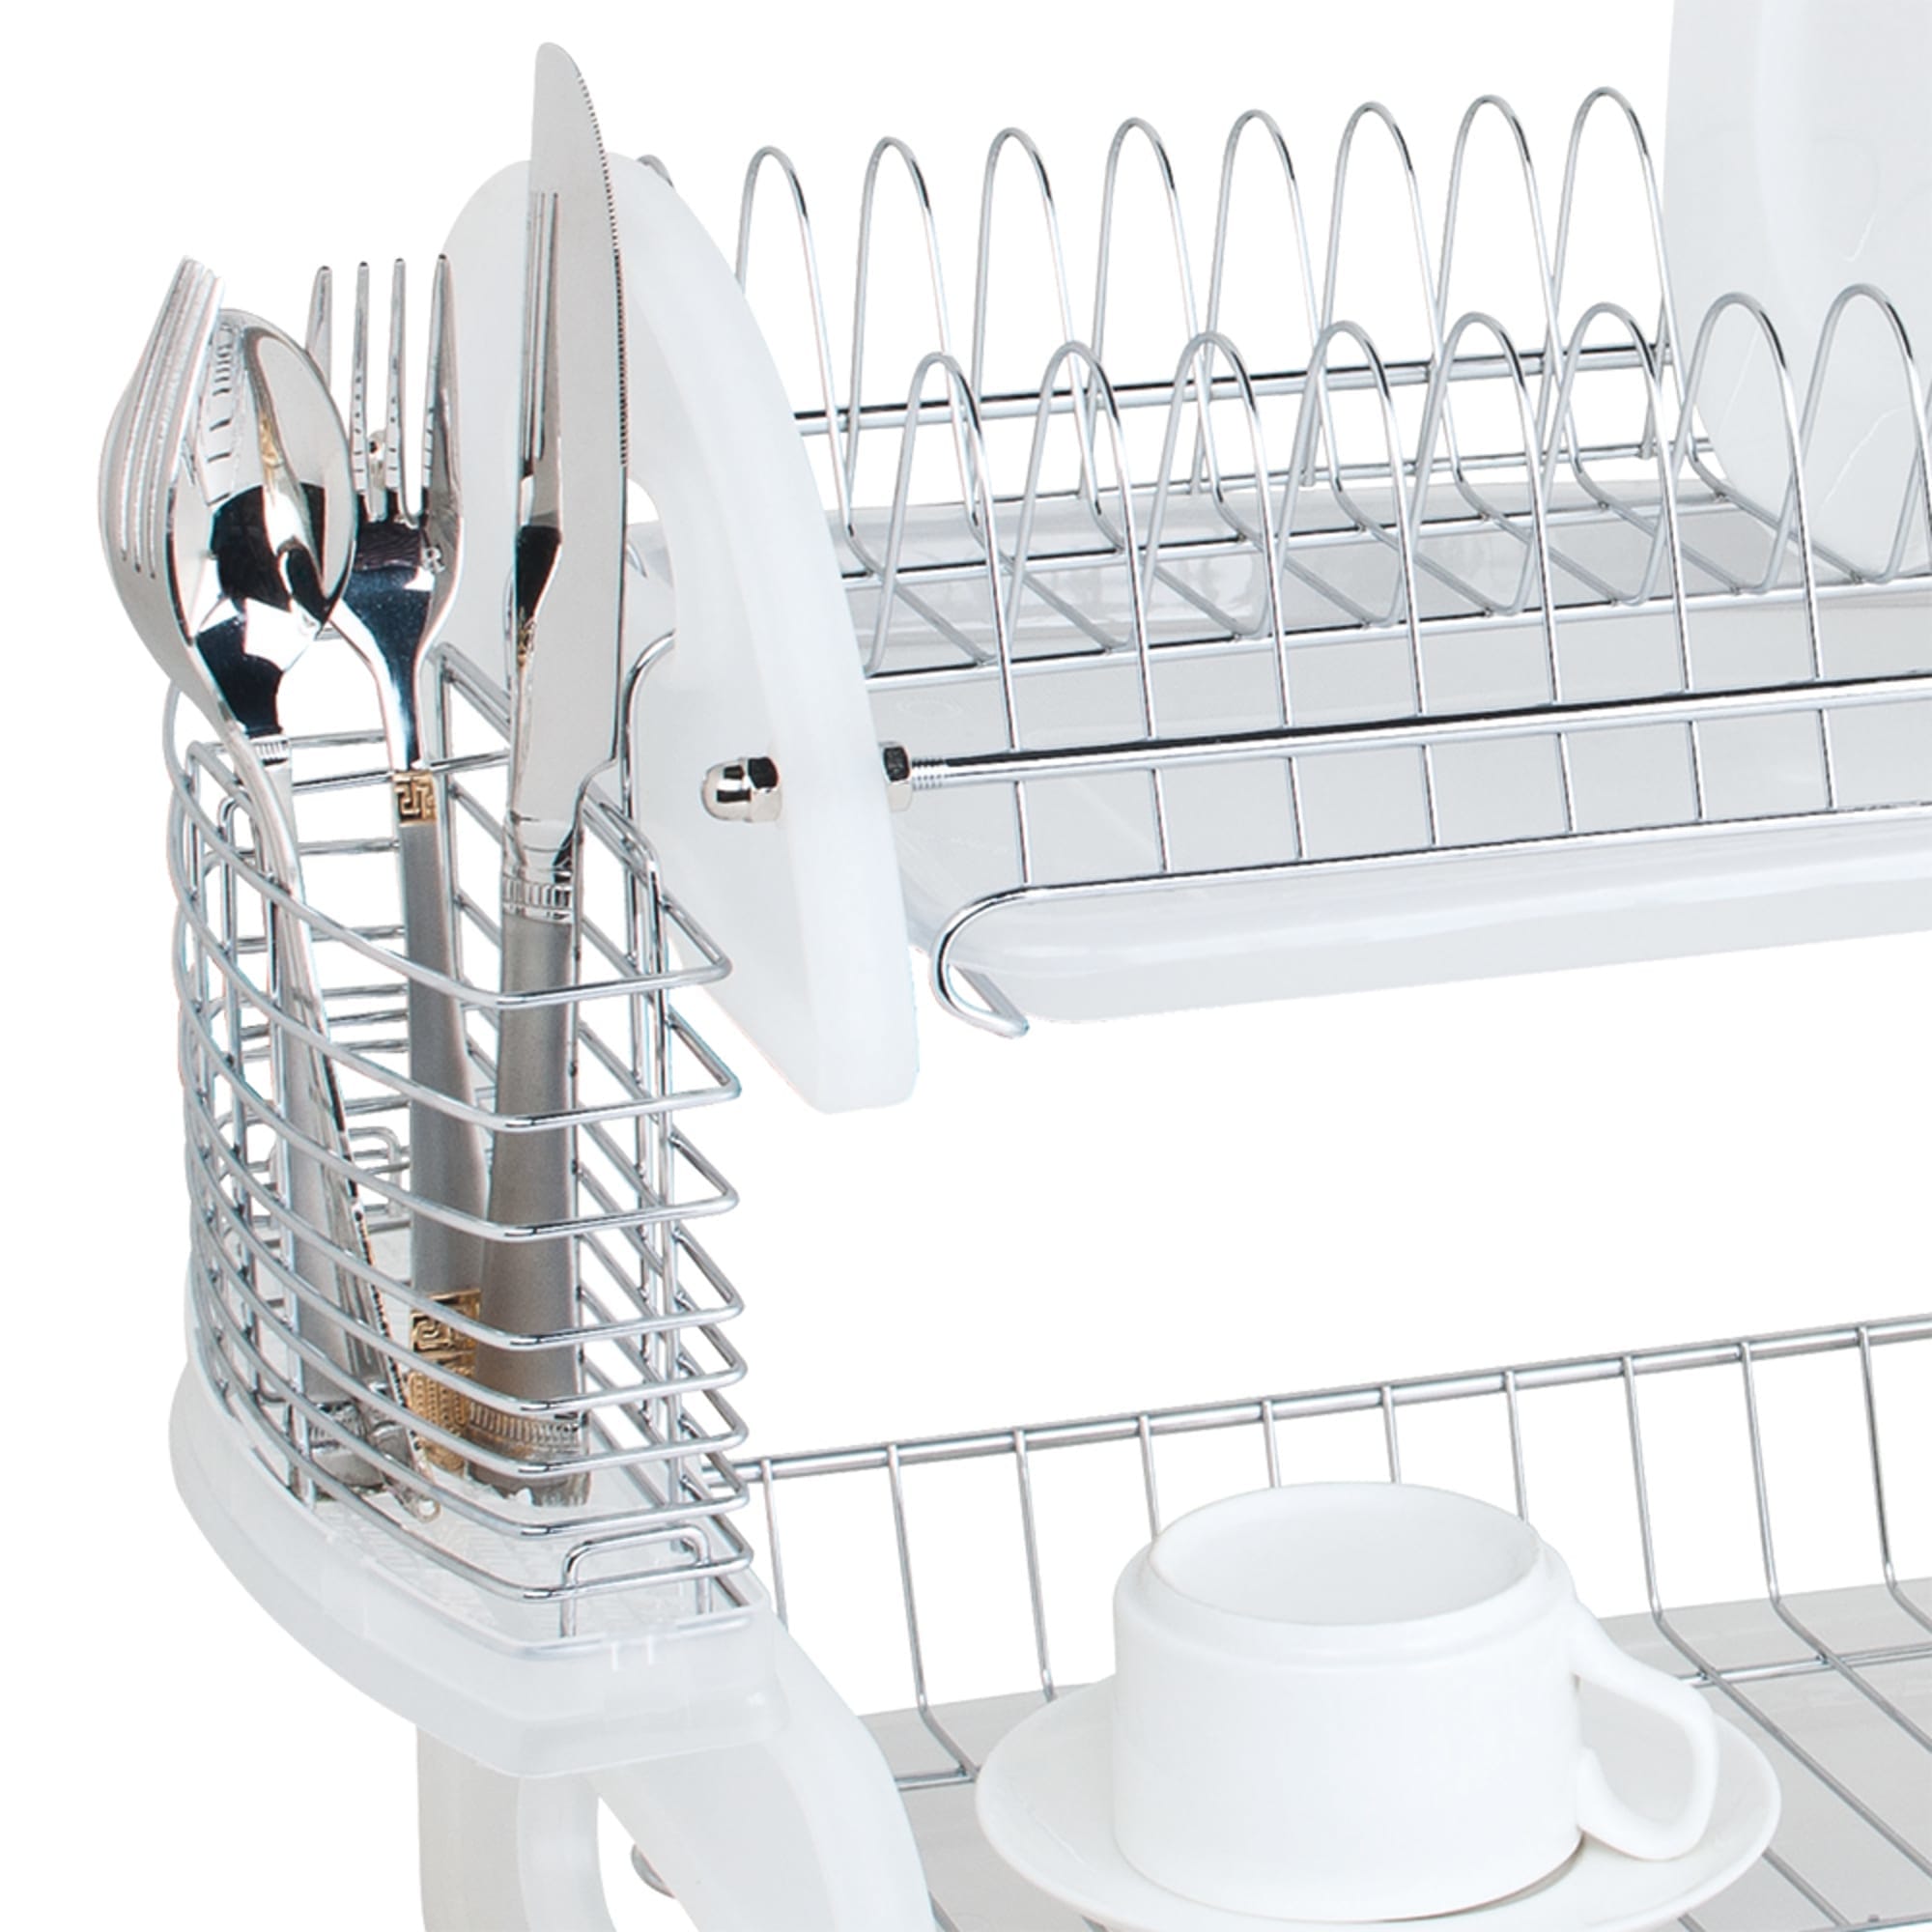 Home Basics 2 Tier Plastic Dish Drainer, White